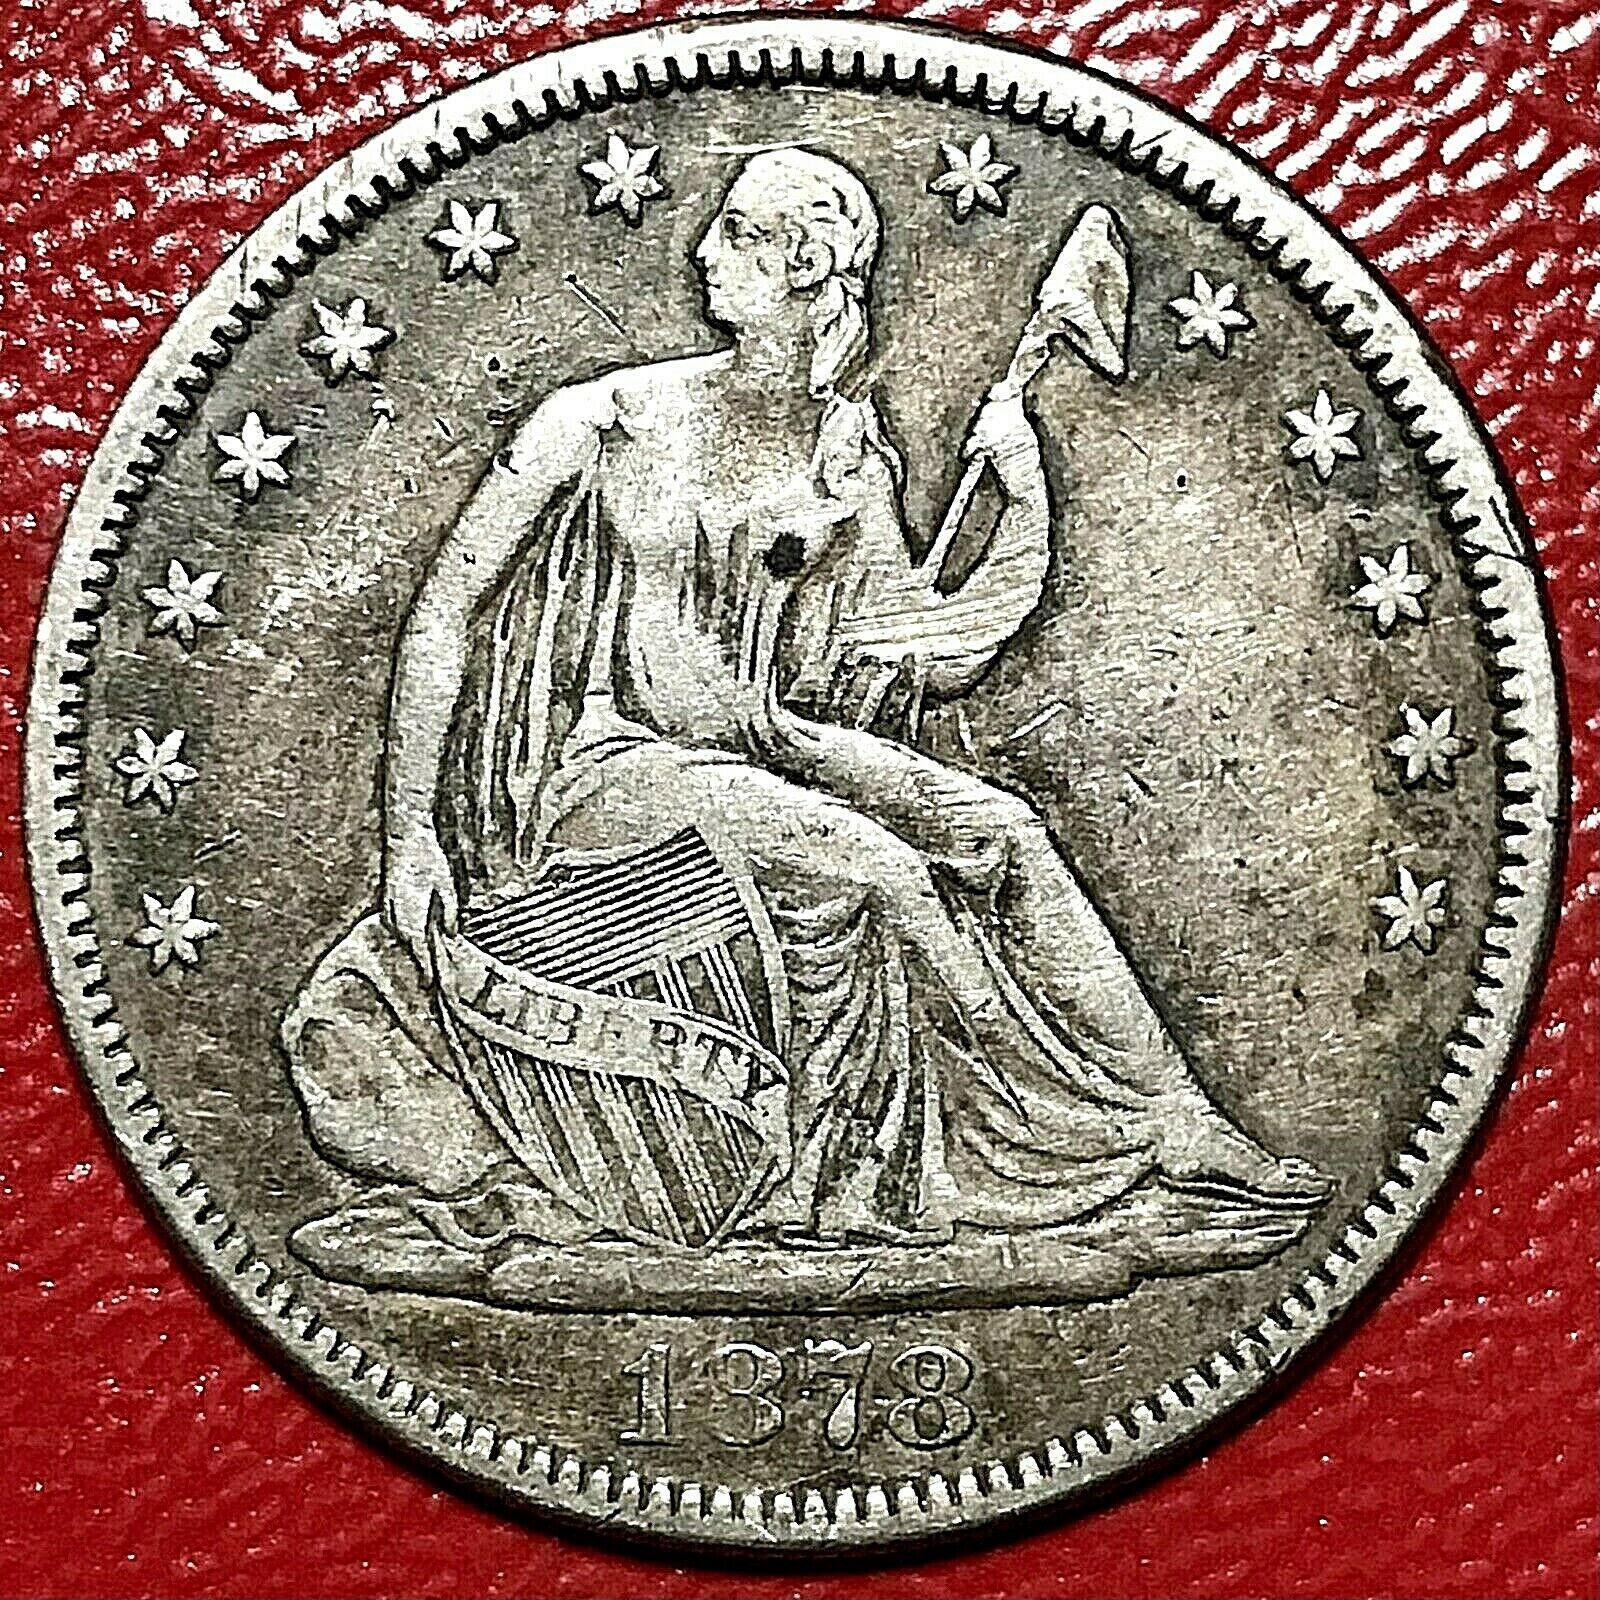 1878 Seated Liberty Half Dollar